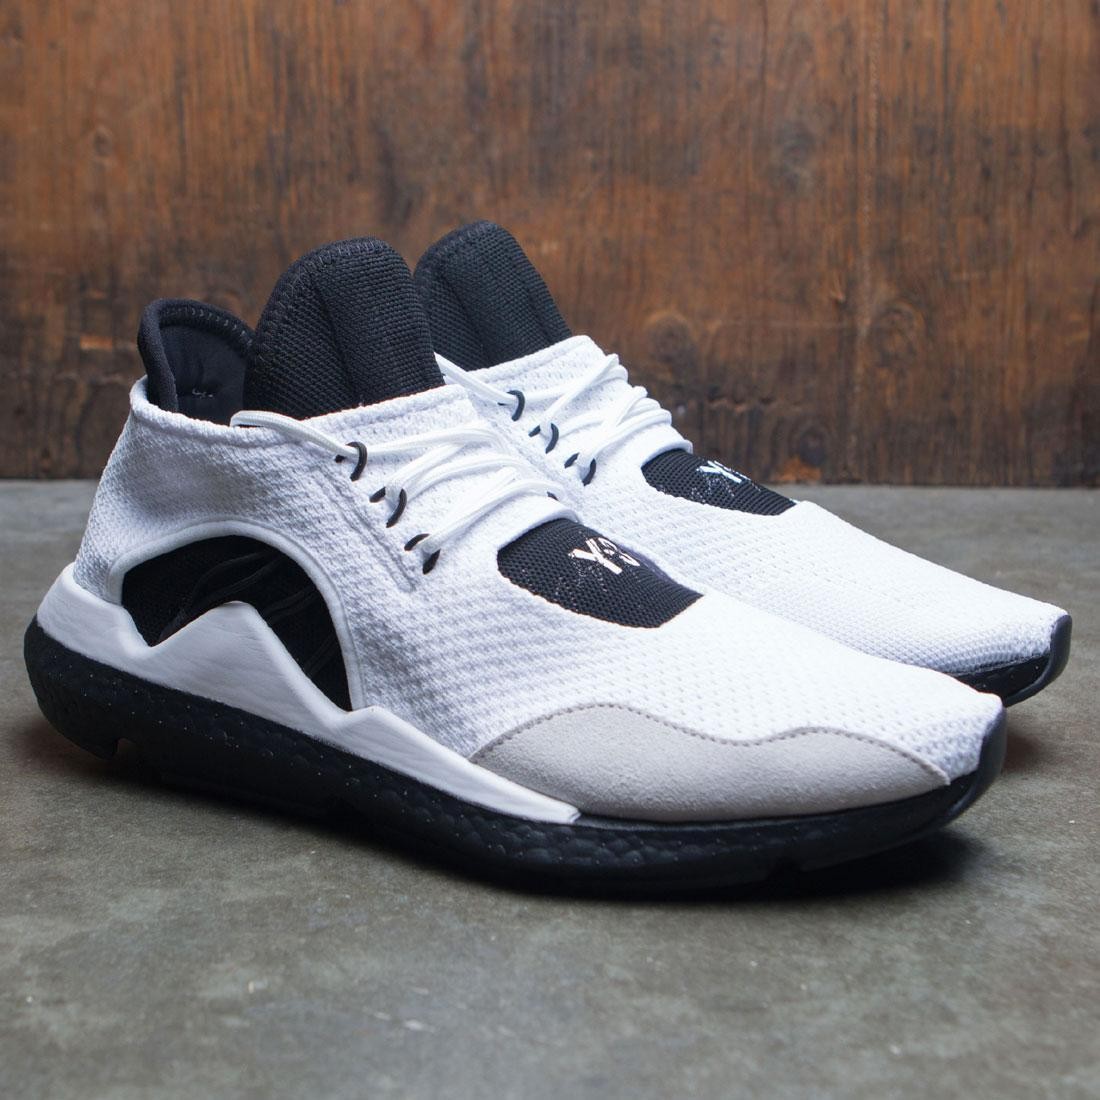 Adidas Y-3 Men Saikou white footwear white black